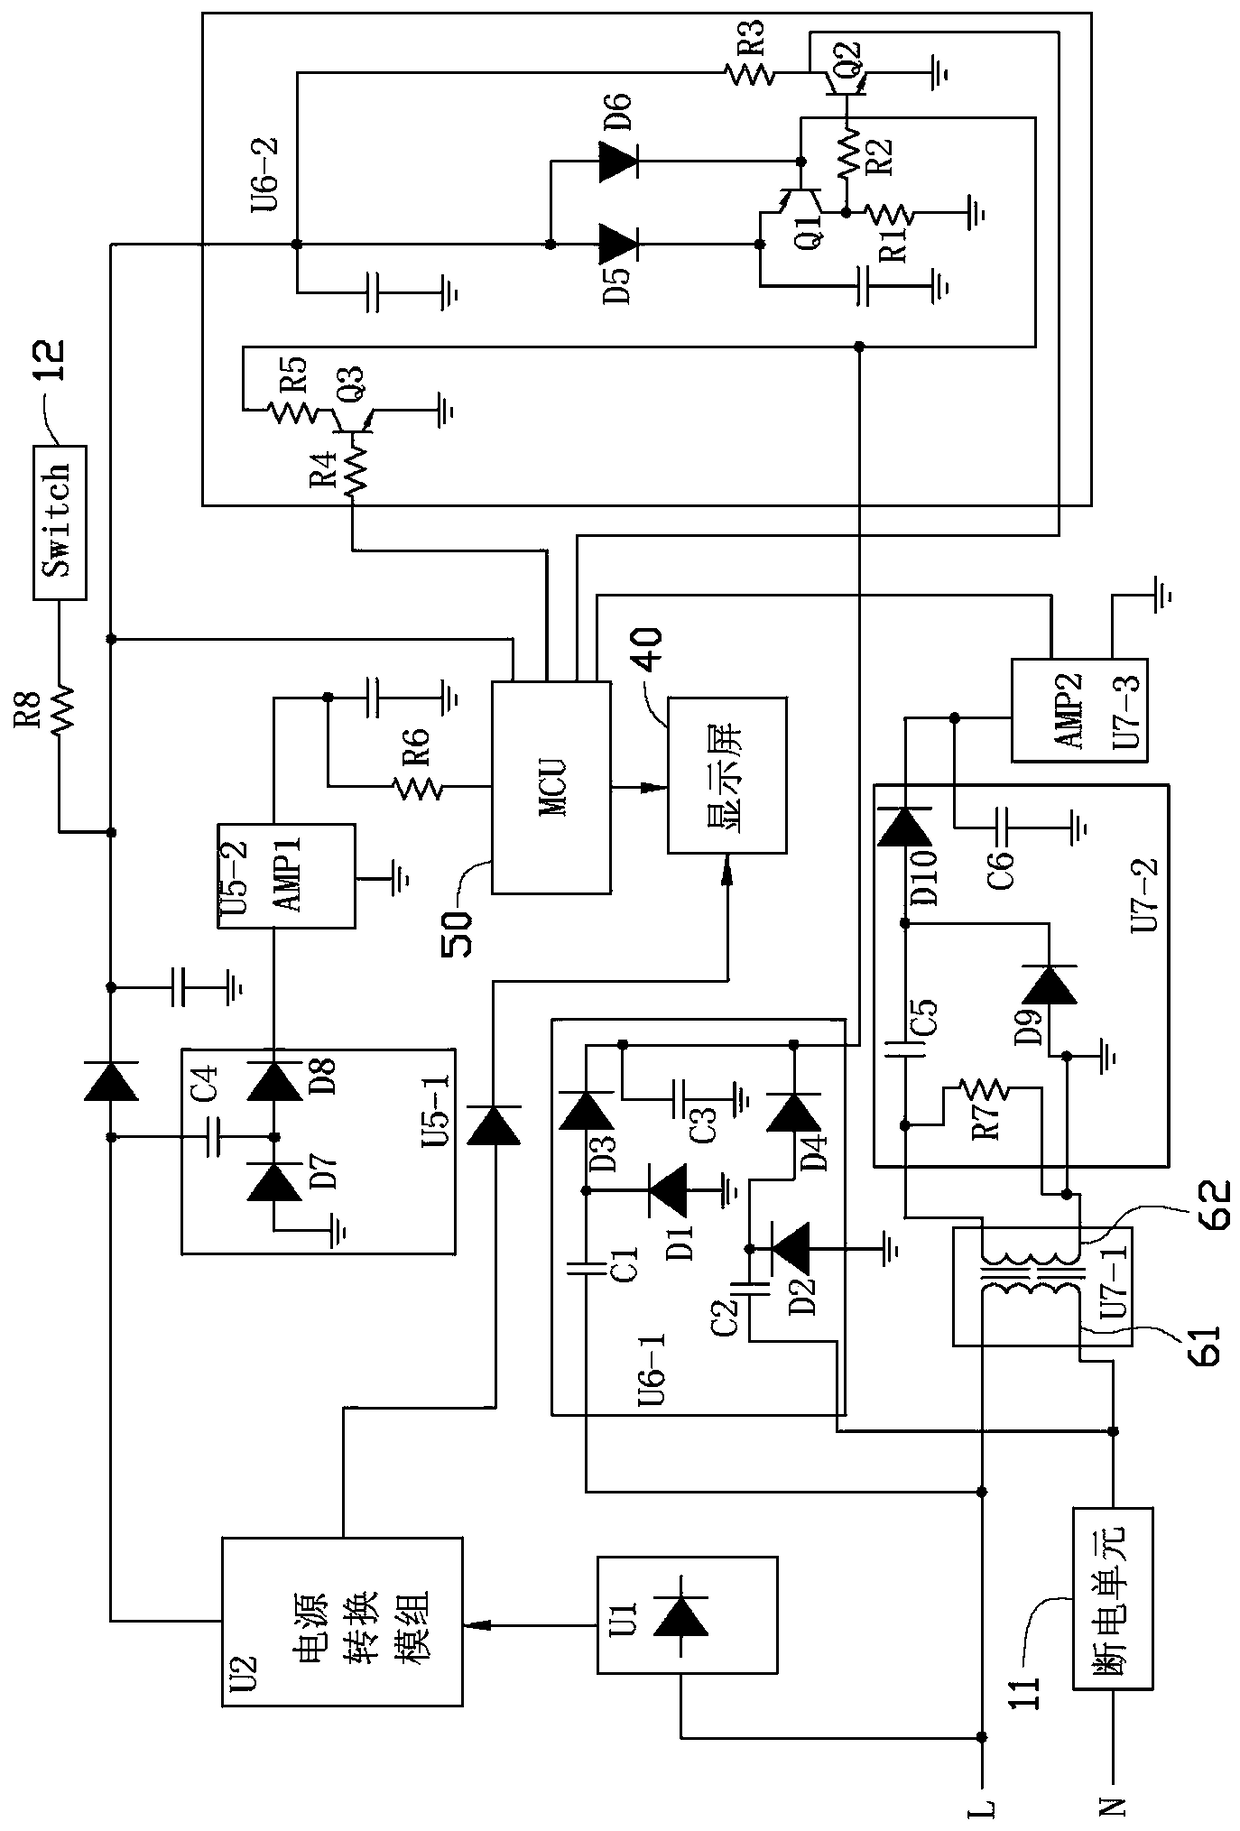 power detection circuit